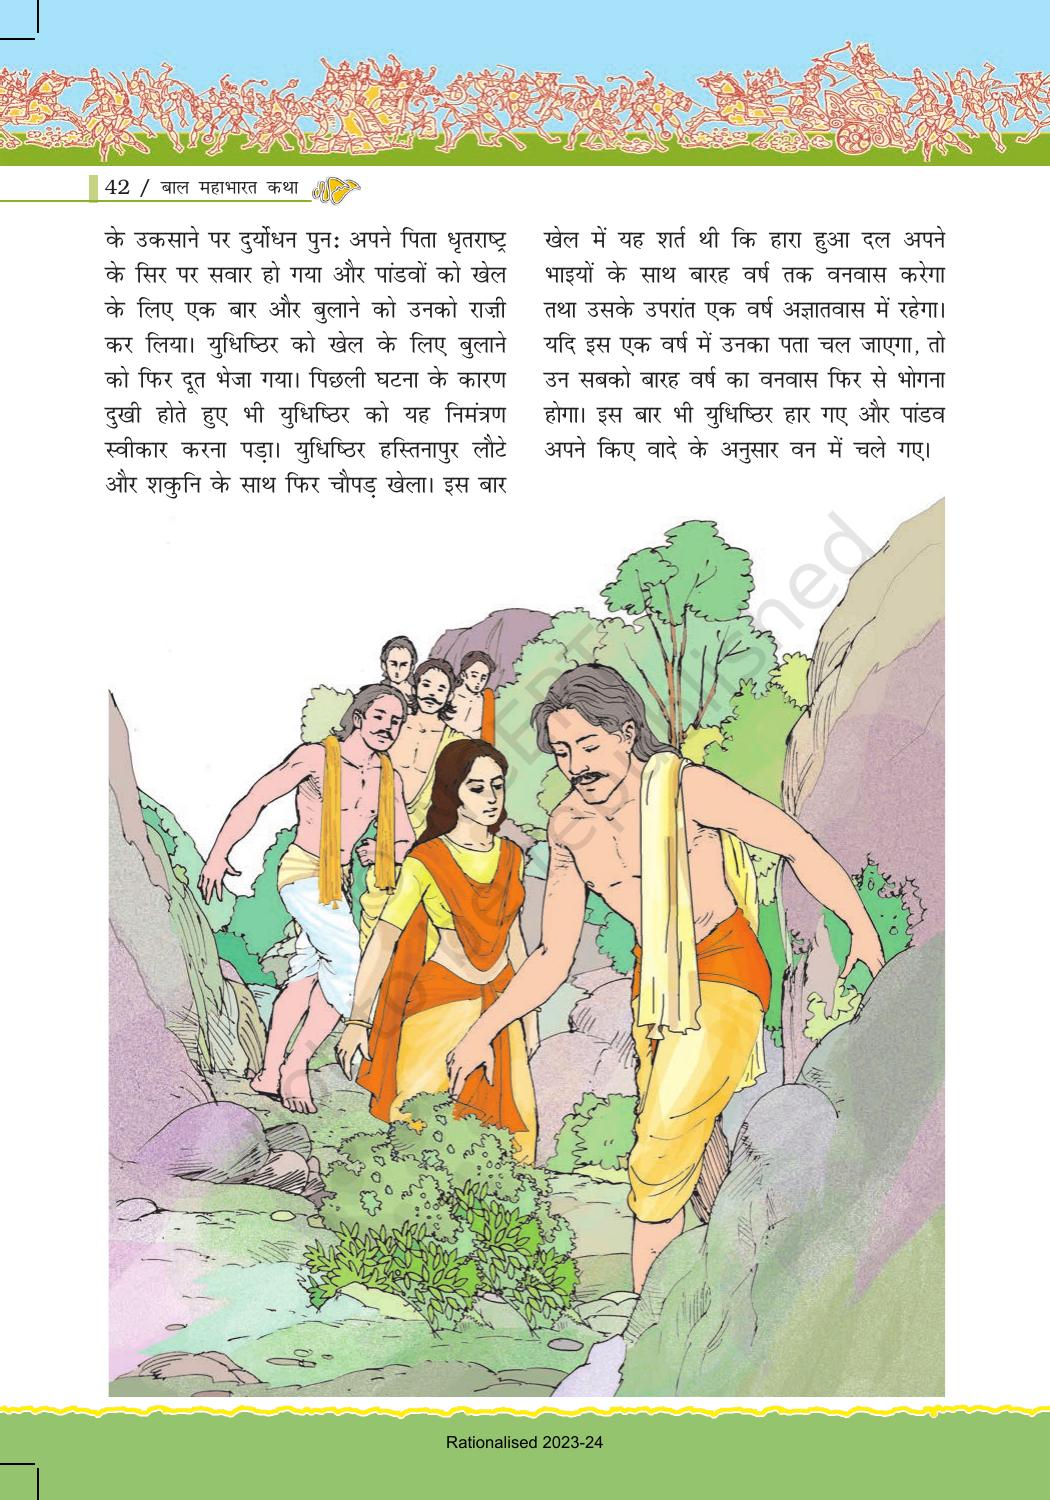 NCERT Book for Class 7 Hindi: Chapter 1-बाल महाभारत कथा - Page 42